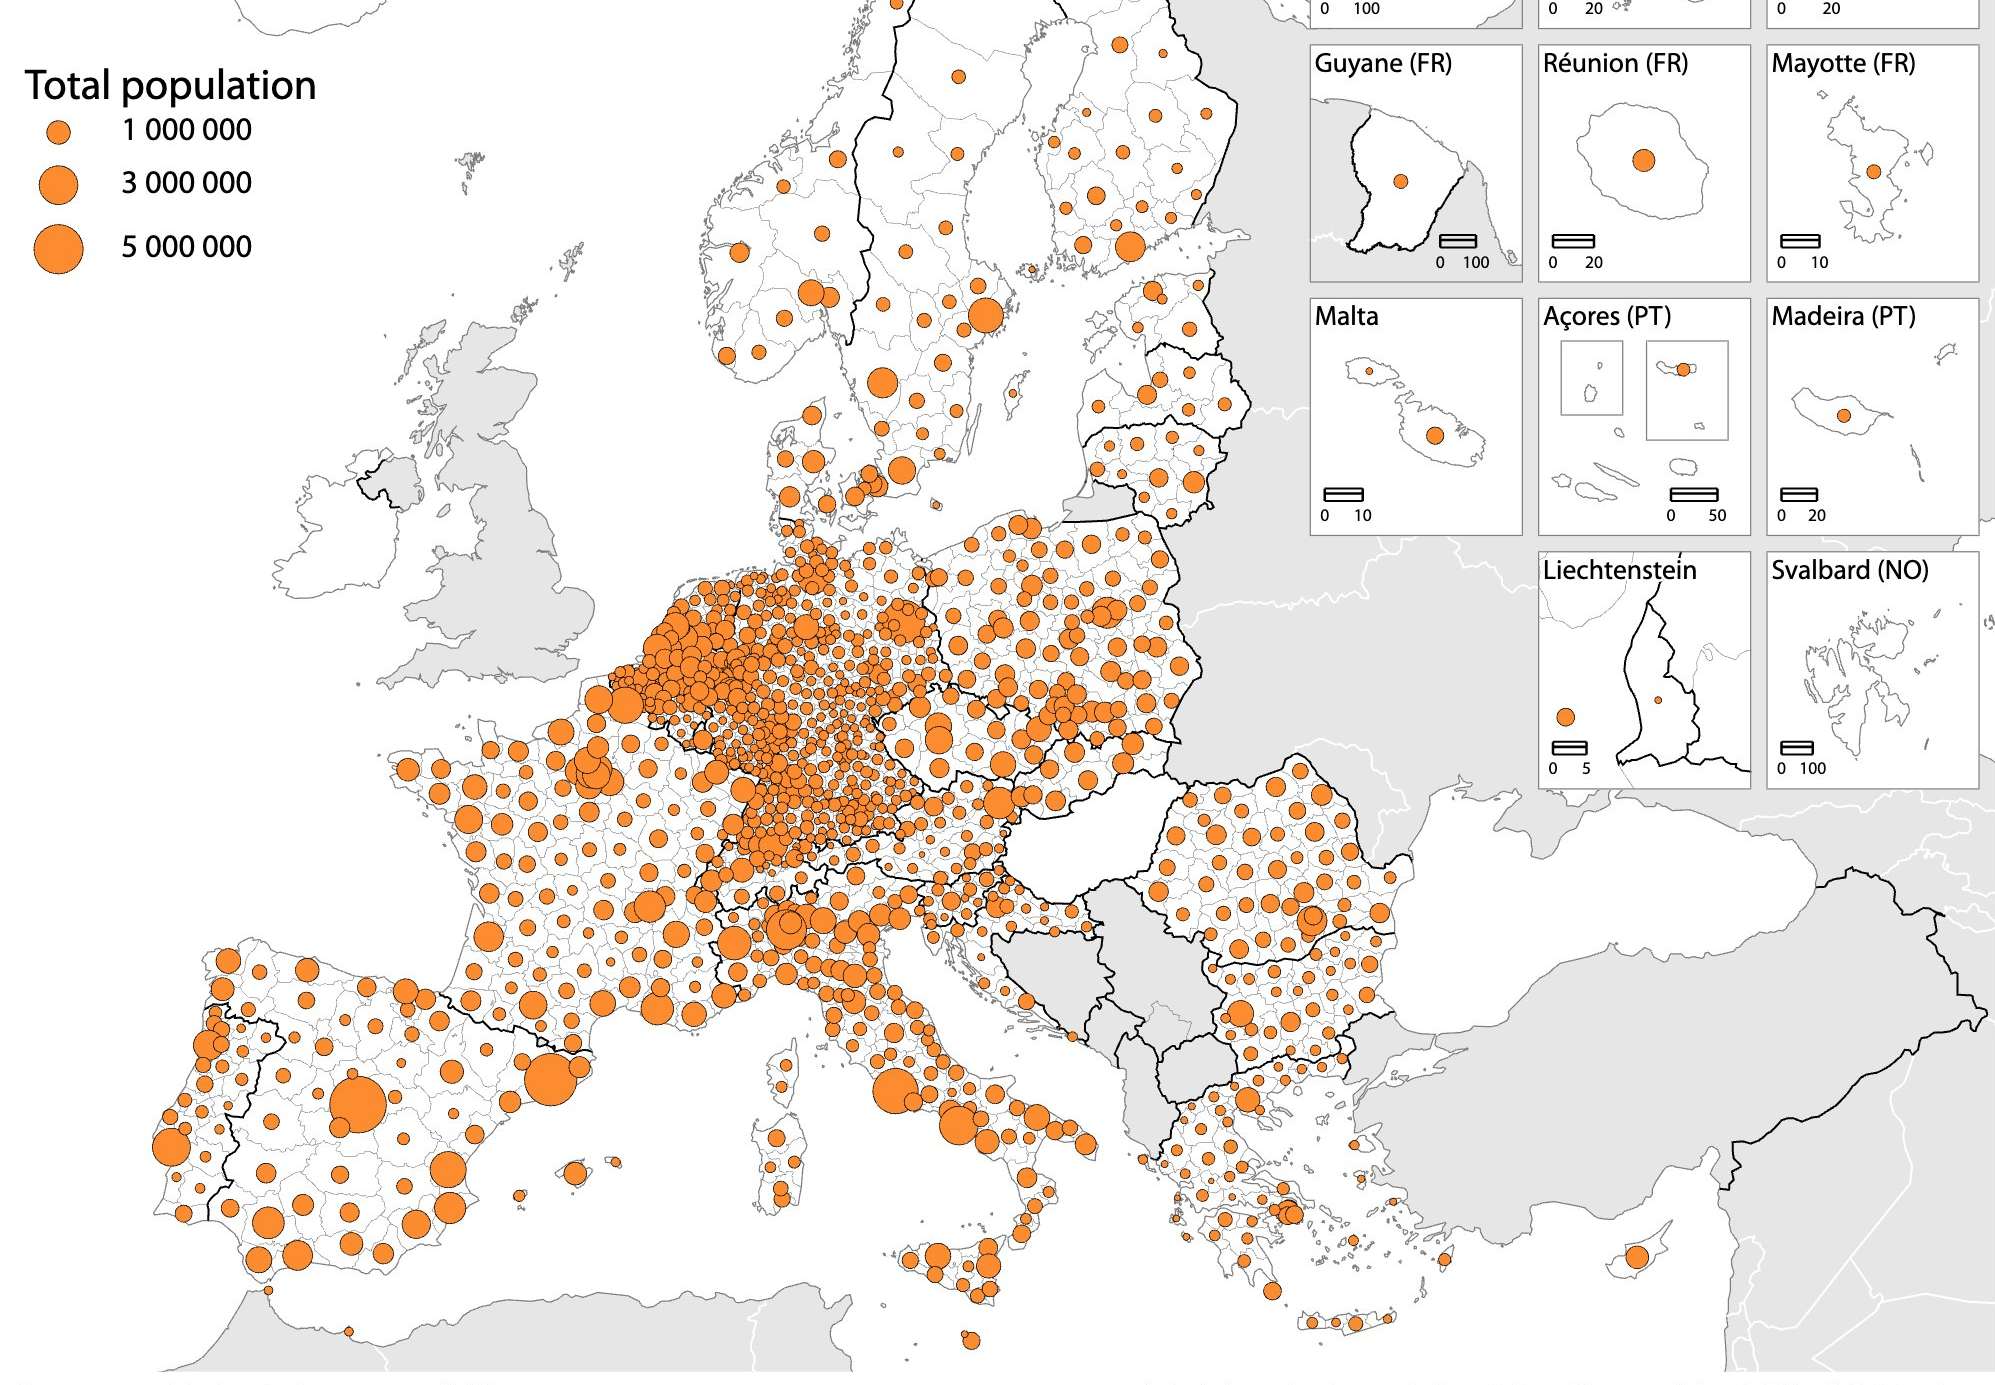 Mapa demográfico de la Unión Europea elaborado por Eurostat.